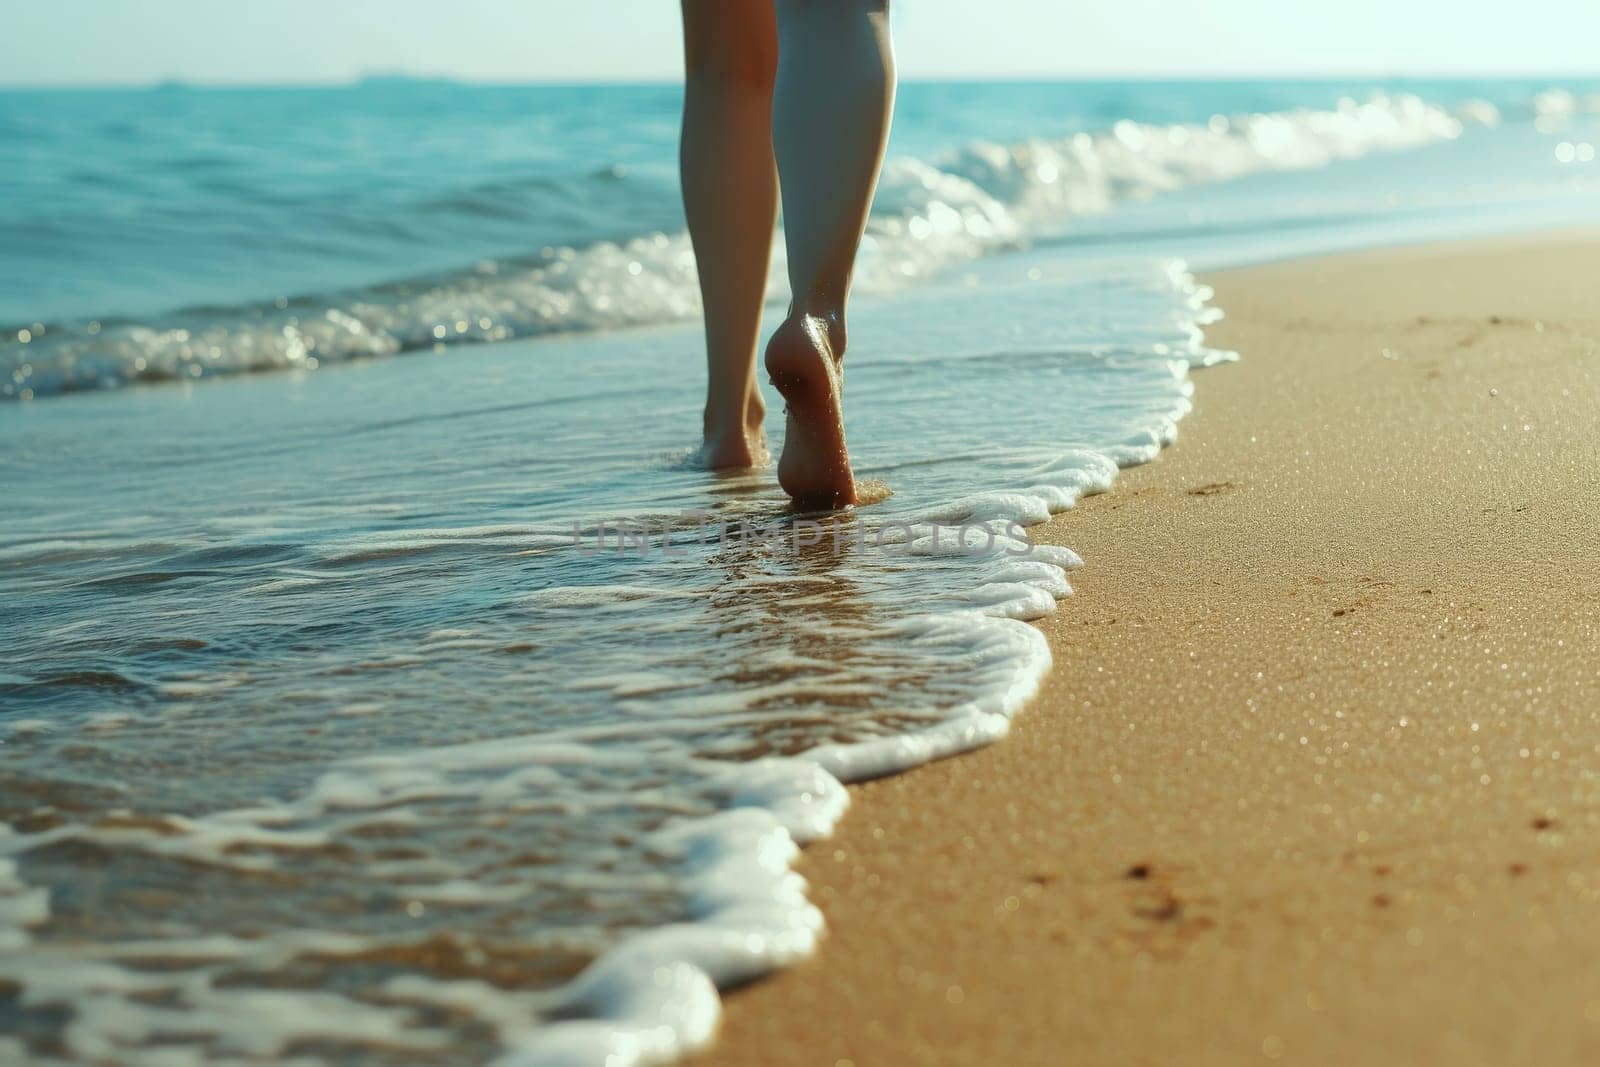 Women's legs on the beach near the sea. Travel concept. AI generated, human enhanced.